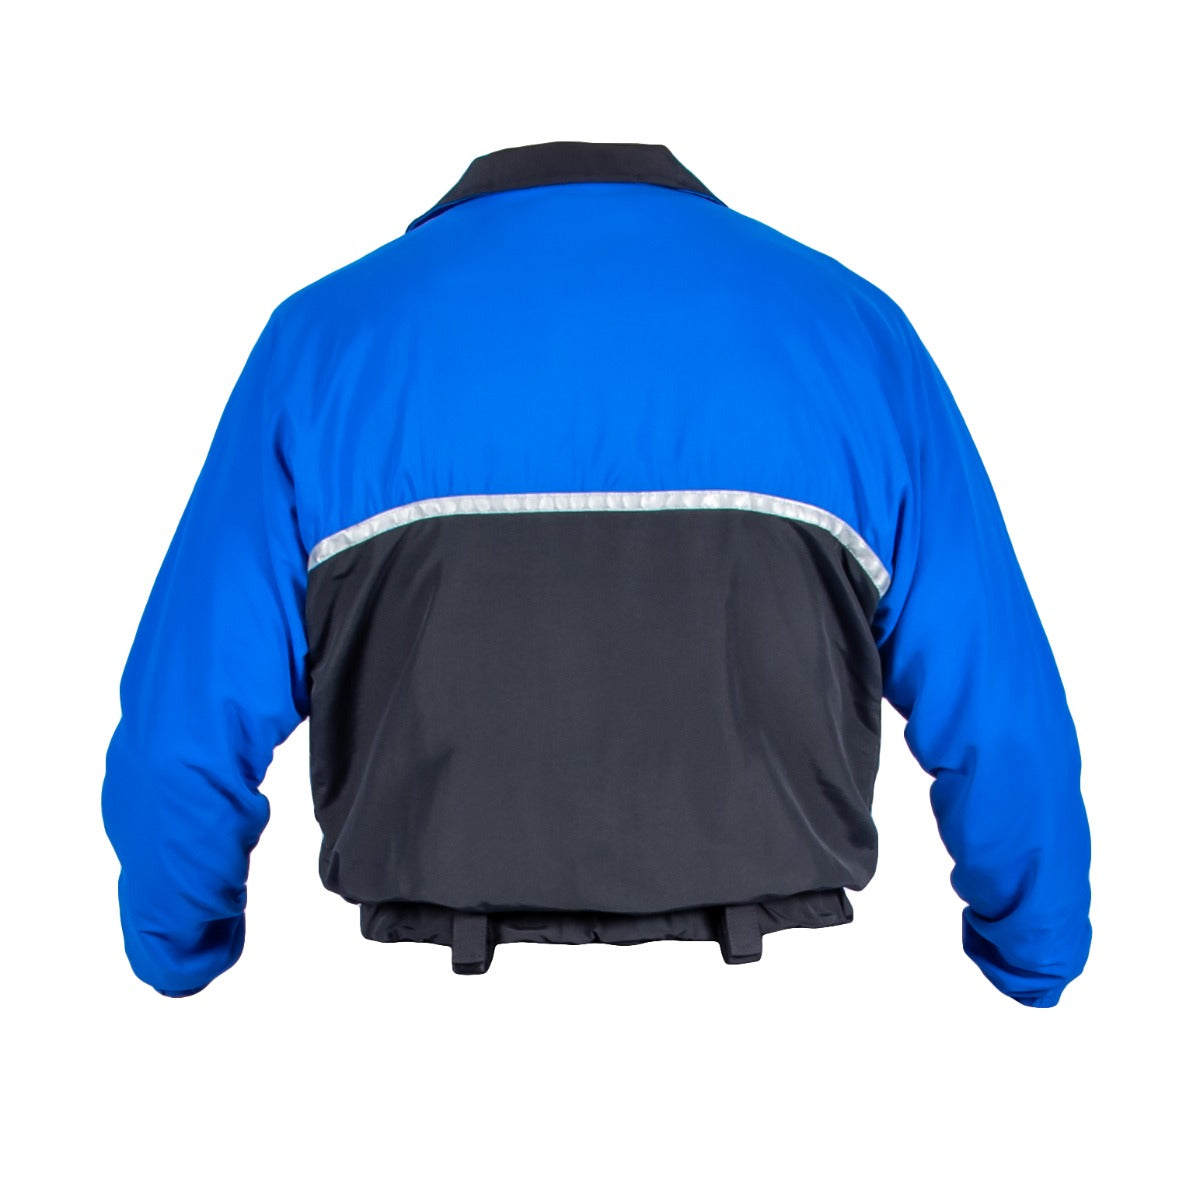 Supplex High Performance Jacket - Sound Uniform Solutions